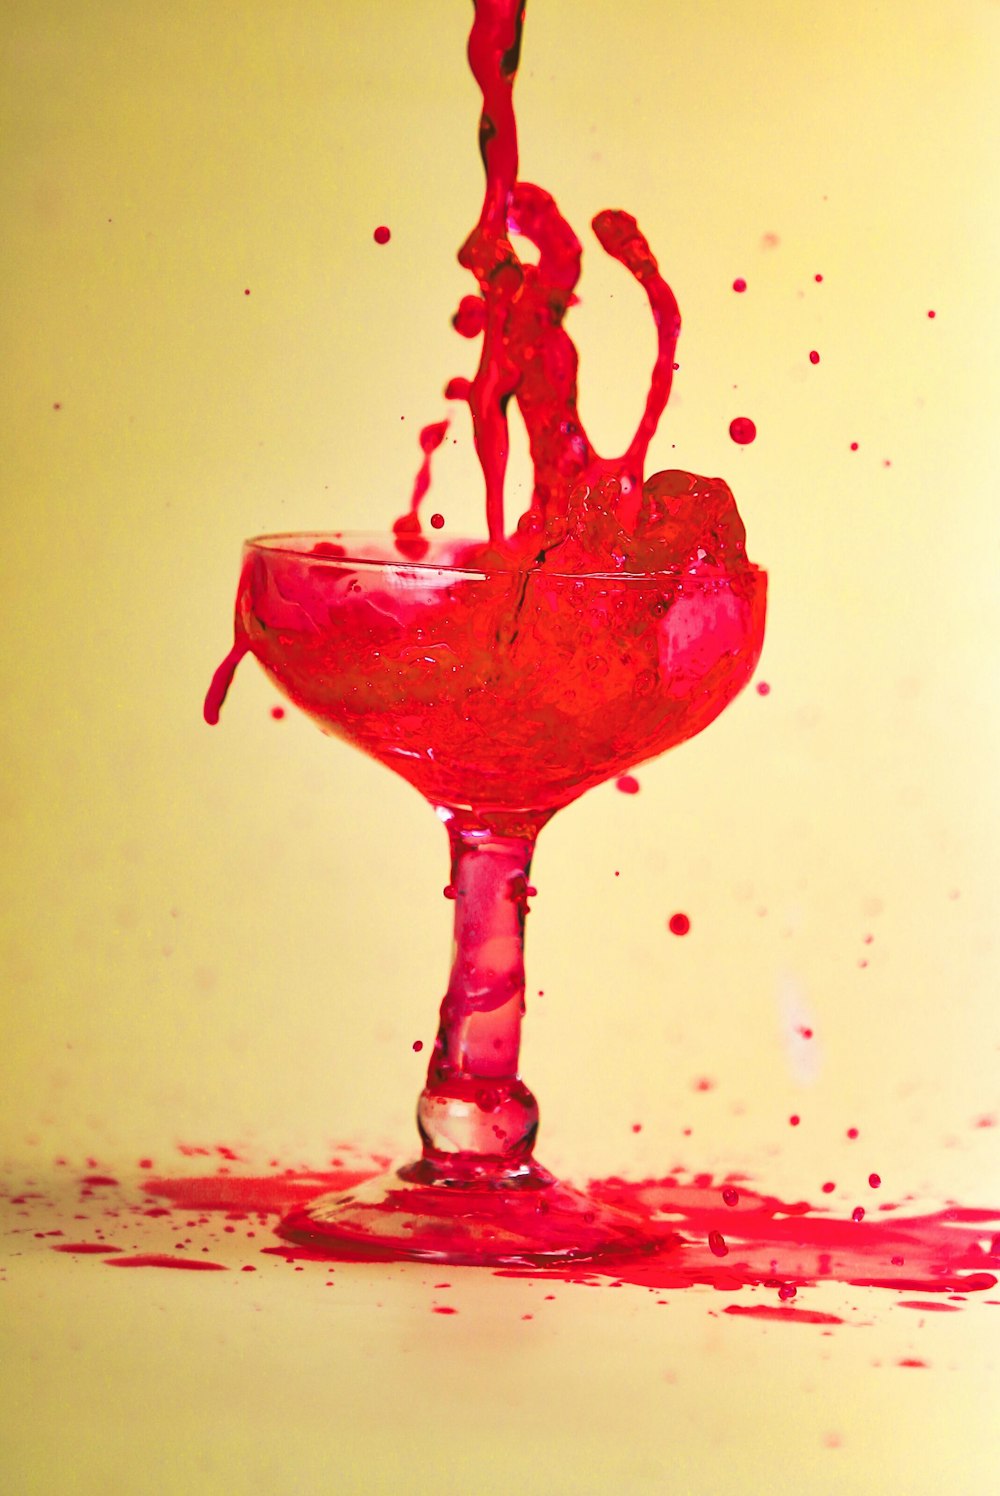 a red liquid splashing into a glass